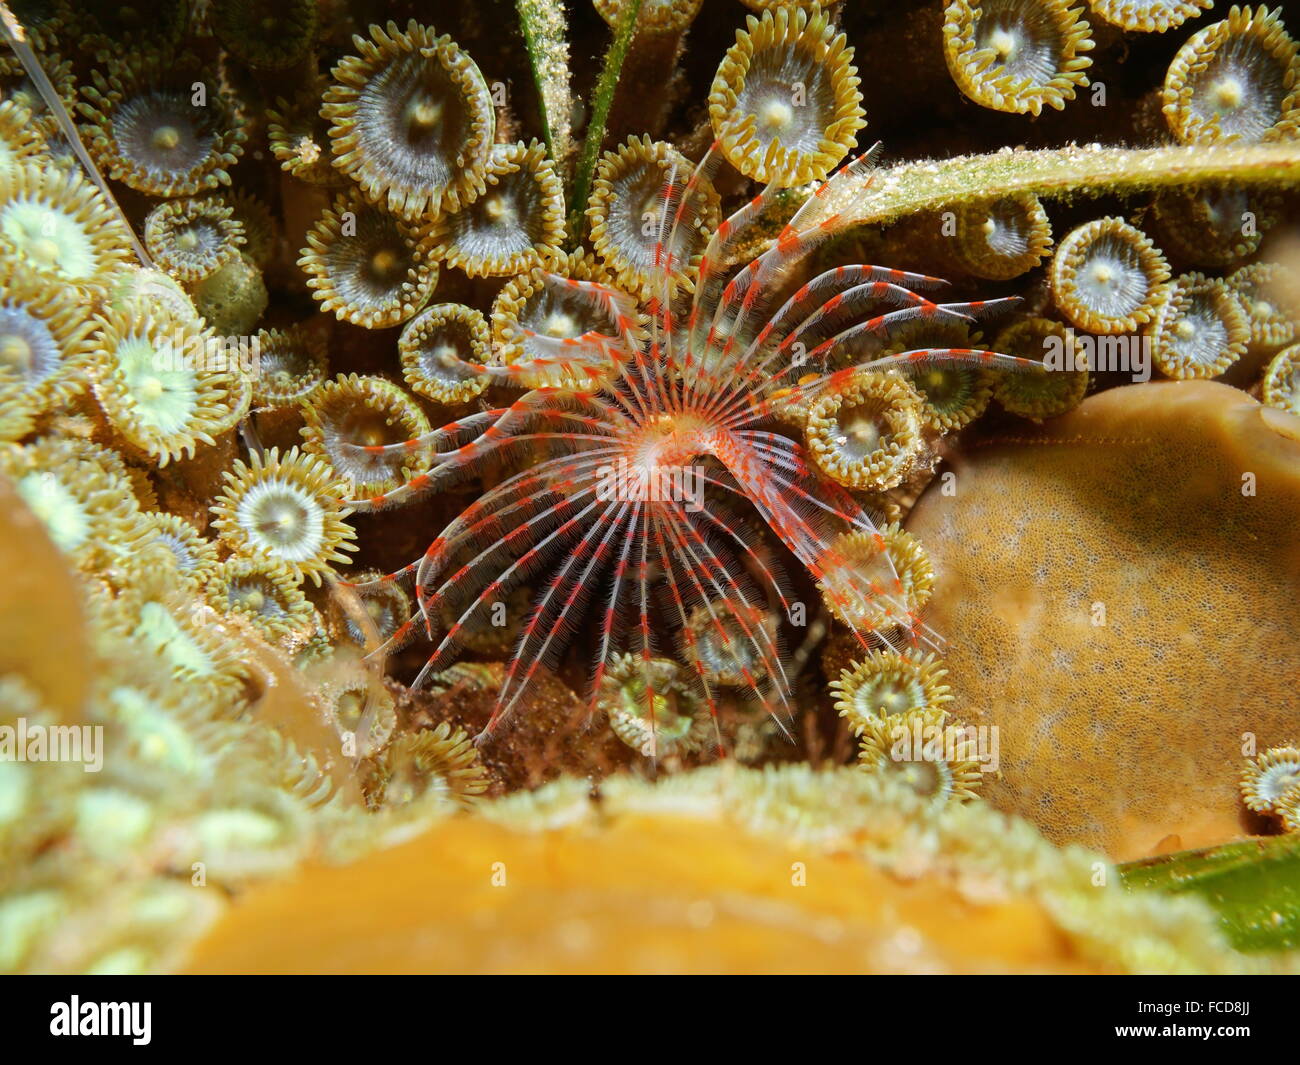 Underwater life, marine worm Turbocavus secretus, on the seabed with zoanthids, Caribbean sea Stock Photo